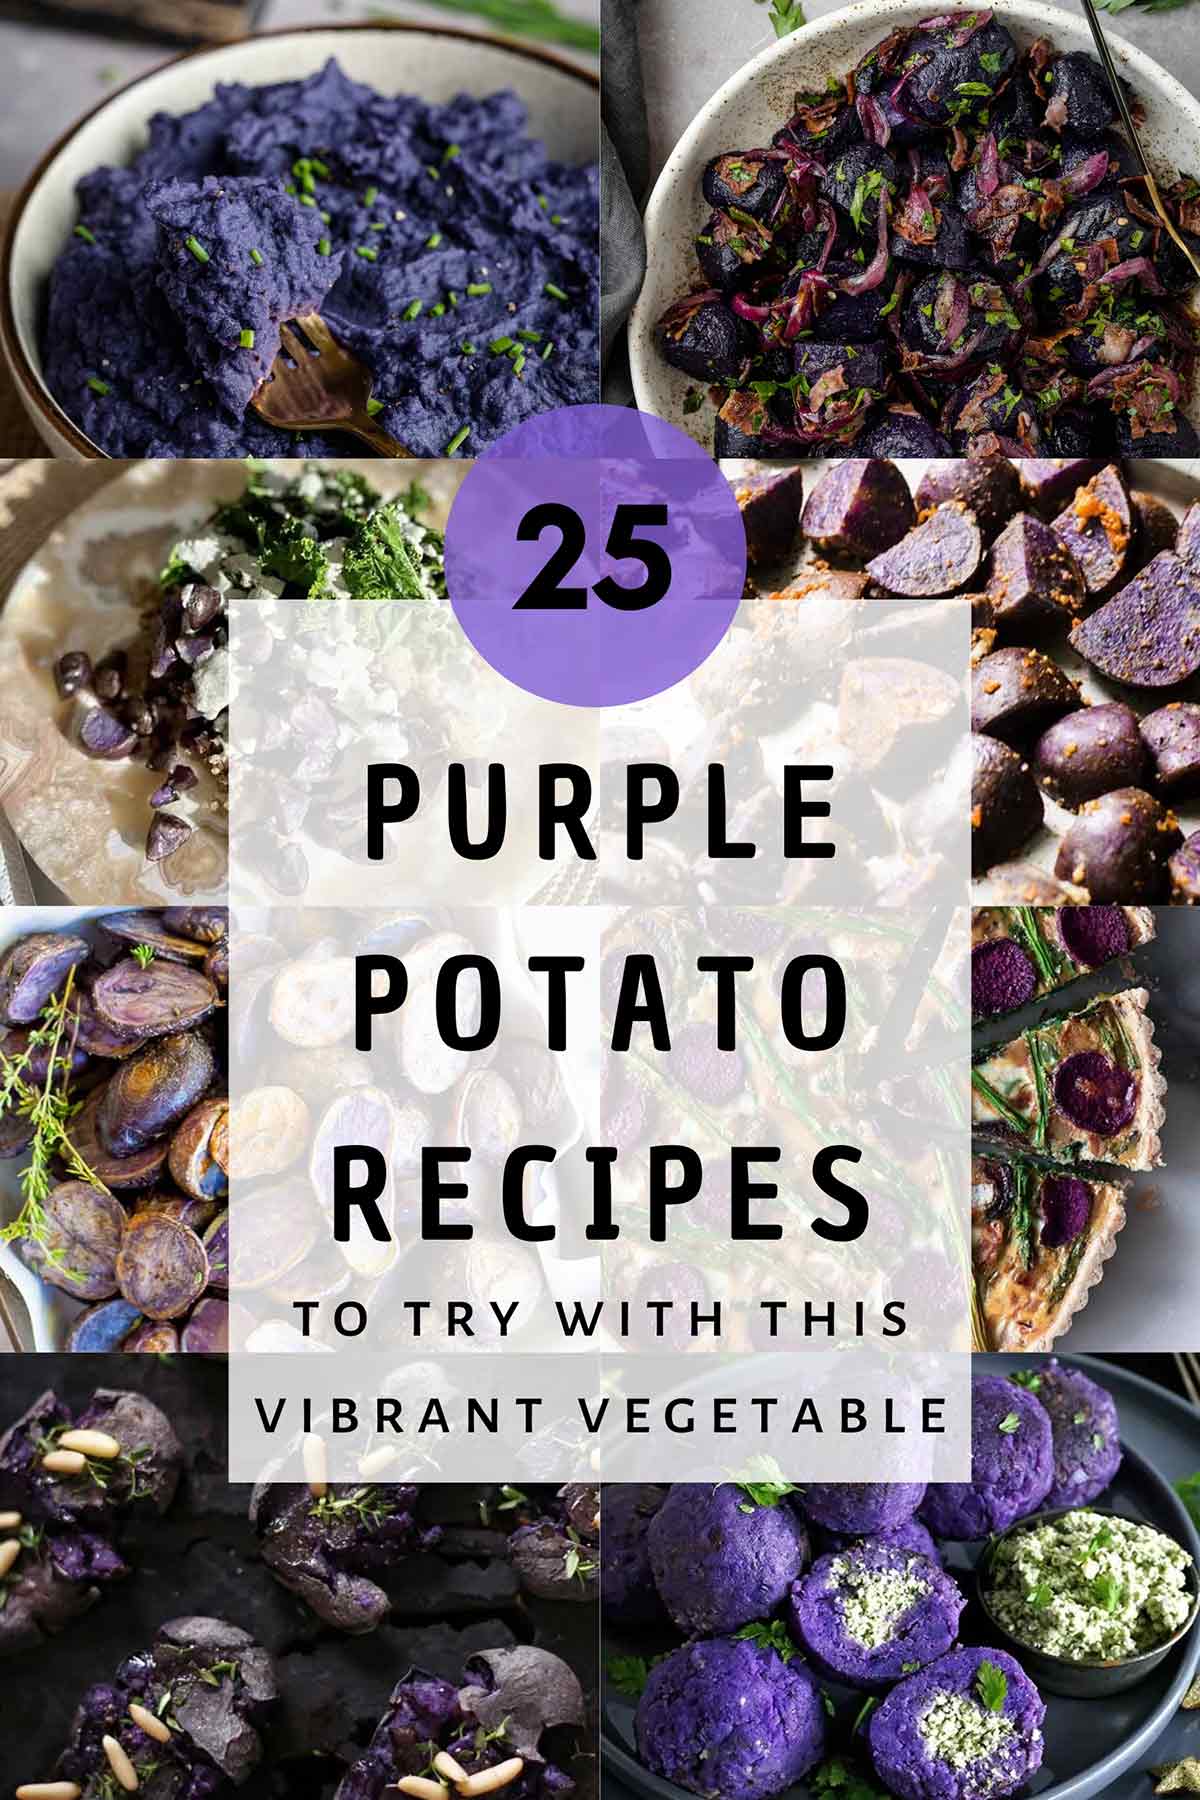 Purple potato recipes